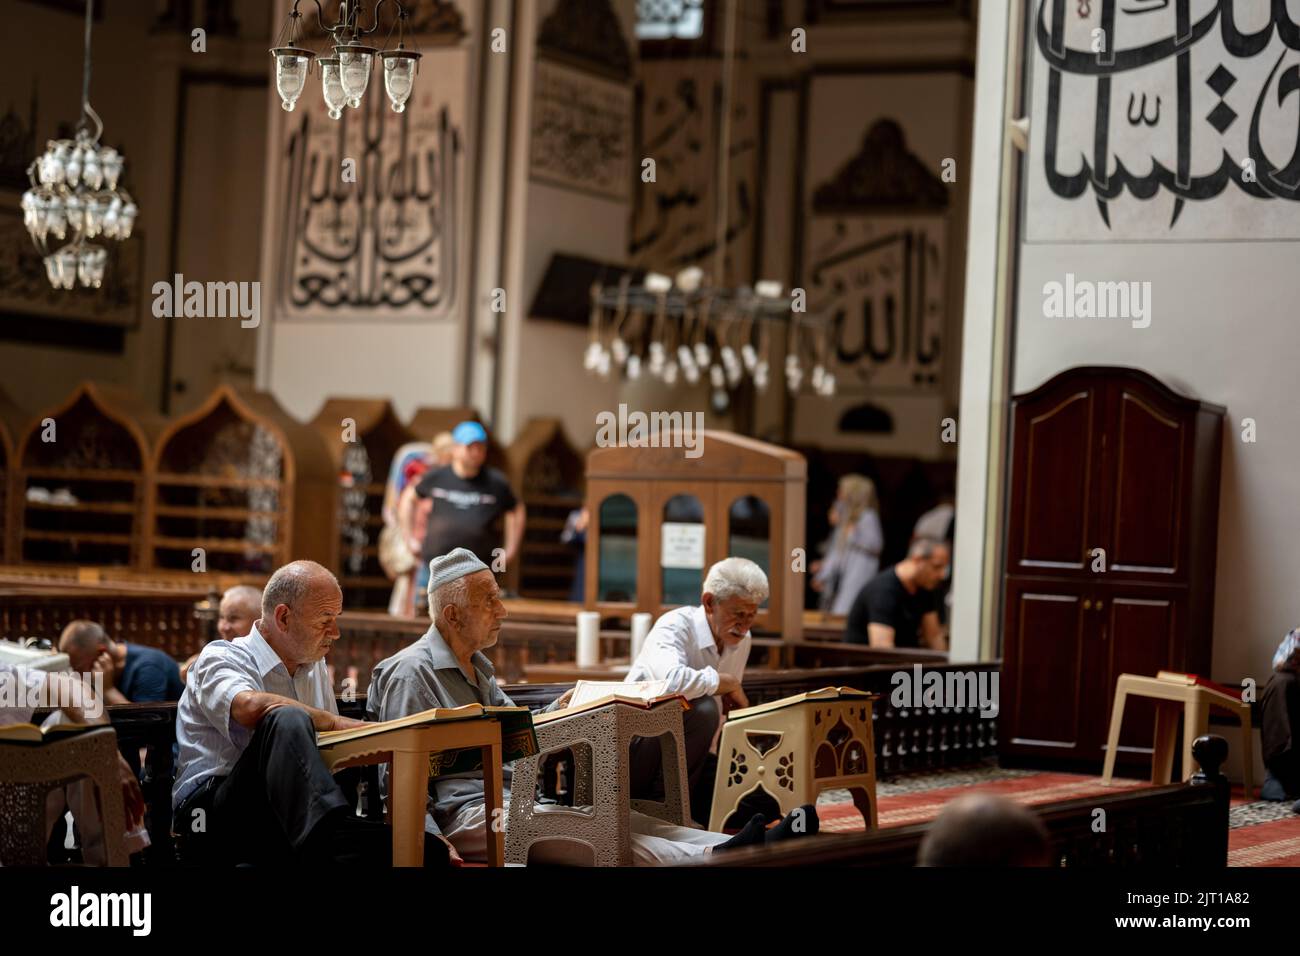 BURSA, TURKEY - AUGUST 21: An interior view of Grand Mosque (Ulu Cami) on August 21, 2022 in Bursa, Turkey. Muslims reciting the Quran inside the mosq Stock Photo